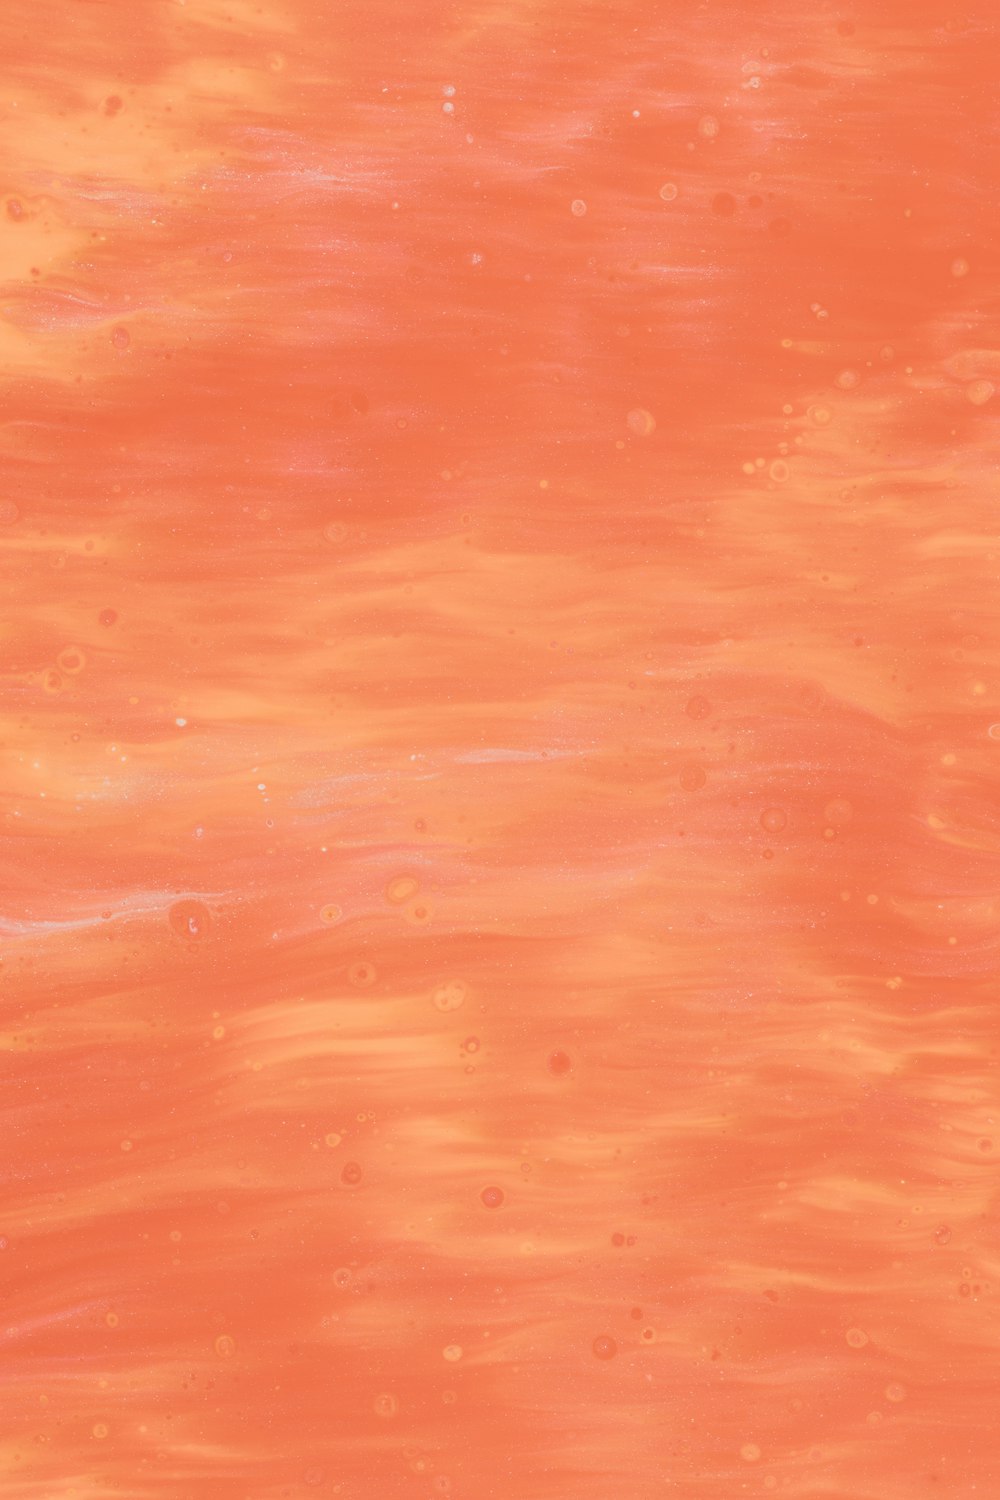 Pastel Orange Pictures | Download Free Images on Unsplash